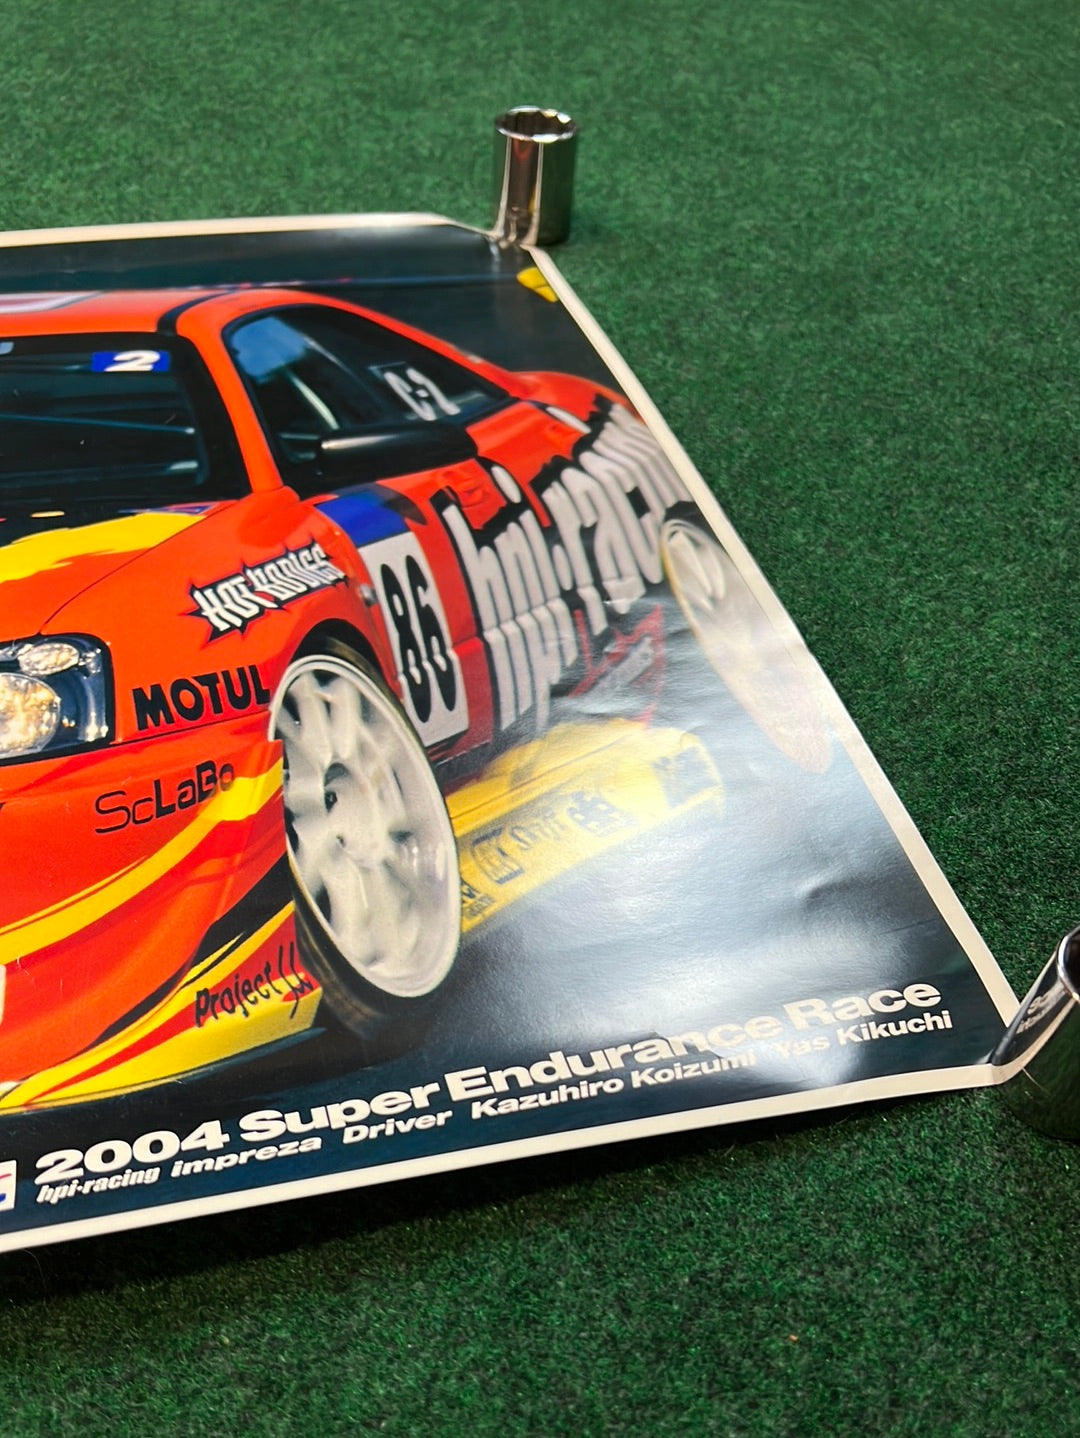 2004 Super Taikyu Prova hpi Racing Subaru Impreza WRX STI Poster